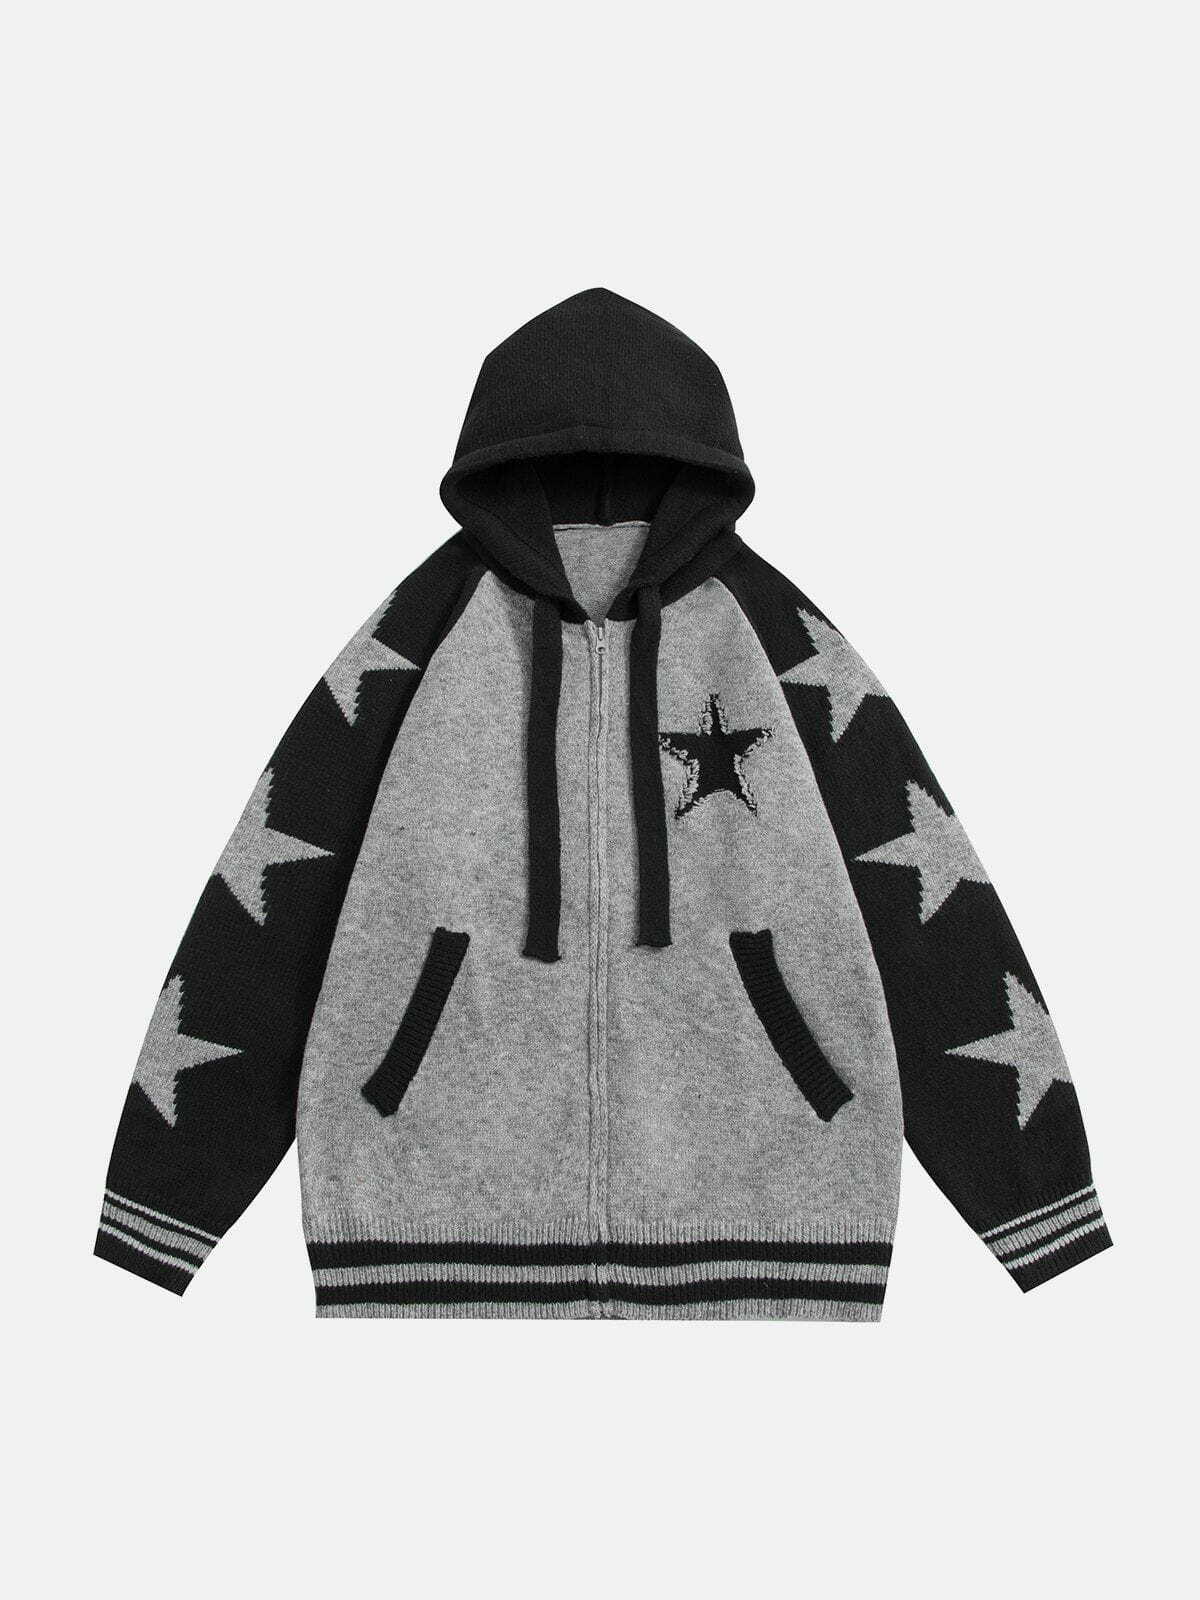 revolutionary pentagrams hoodie edgy patchwork design 6727